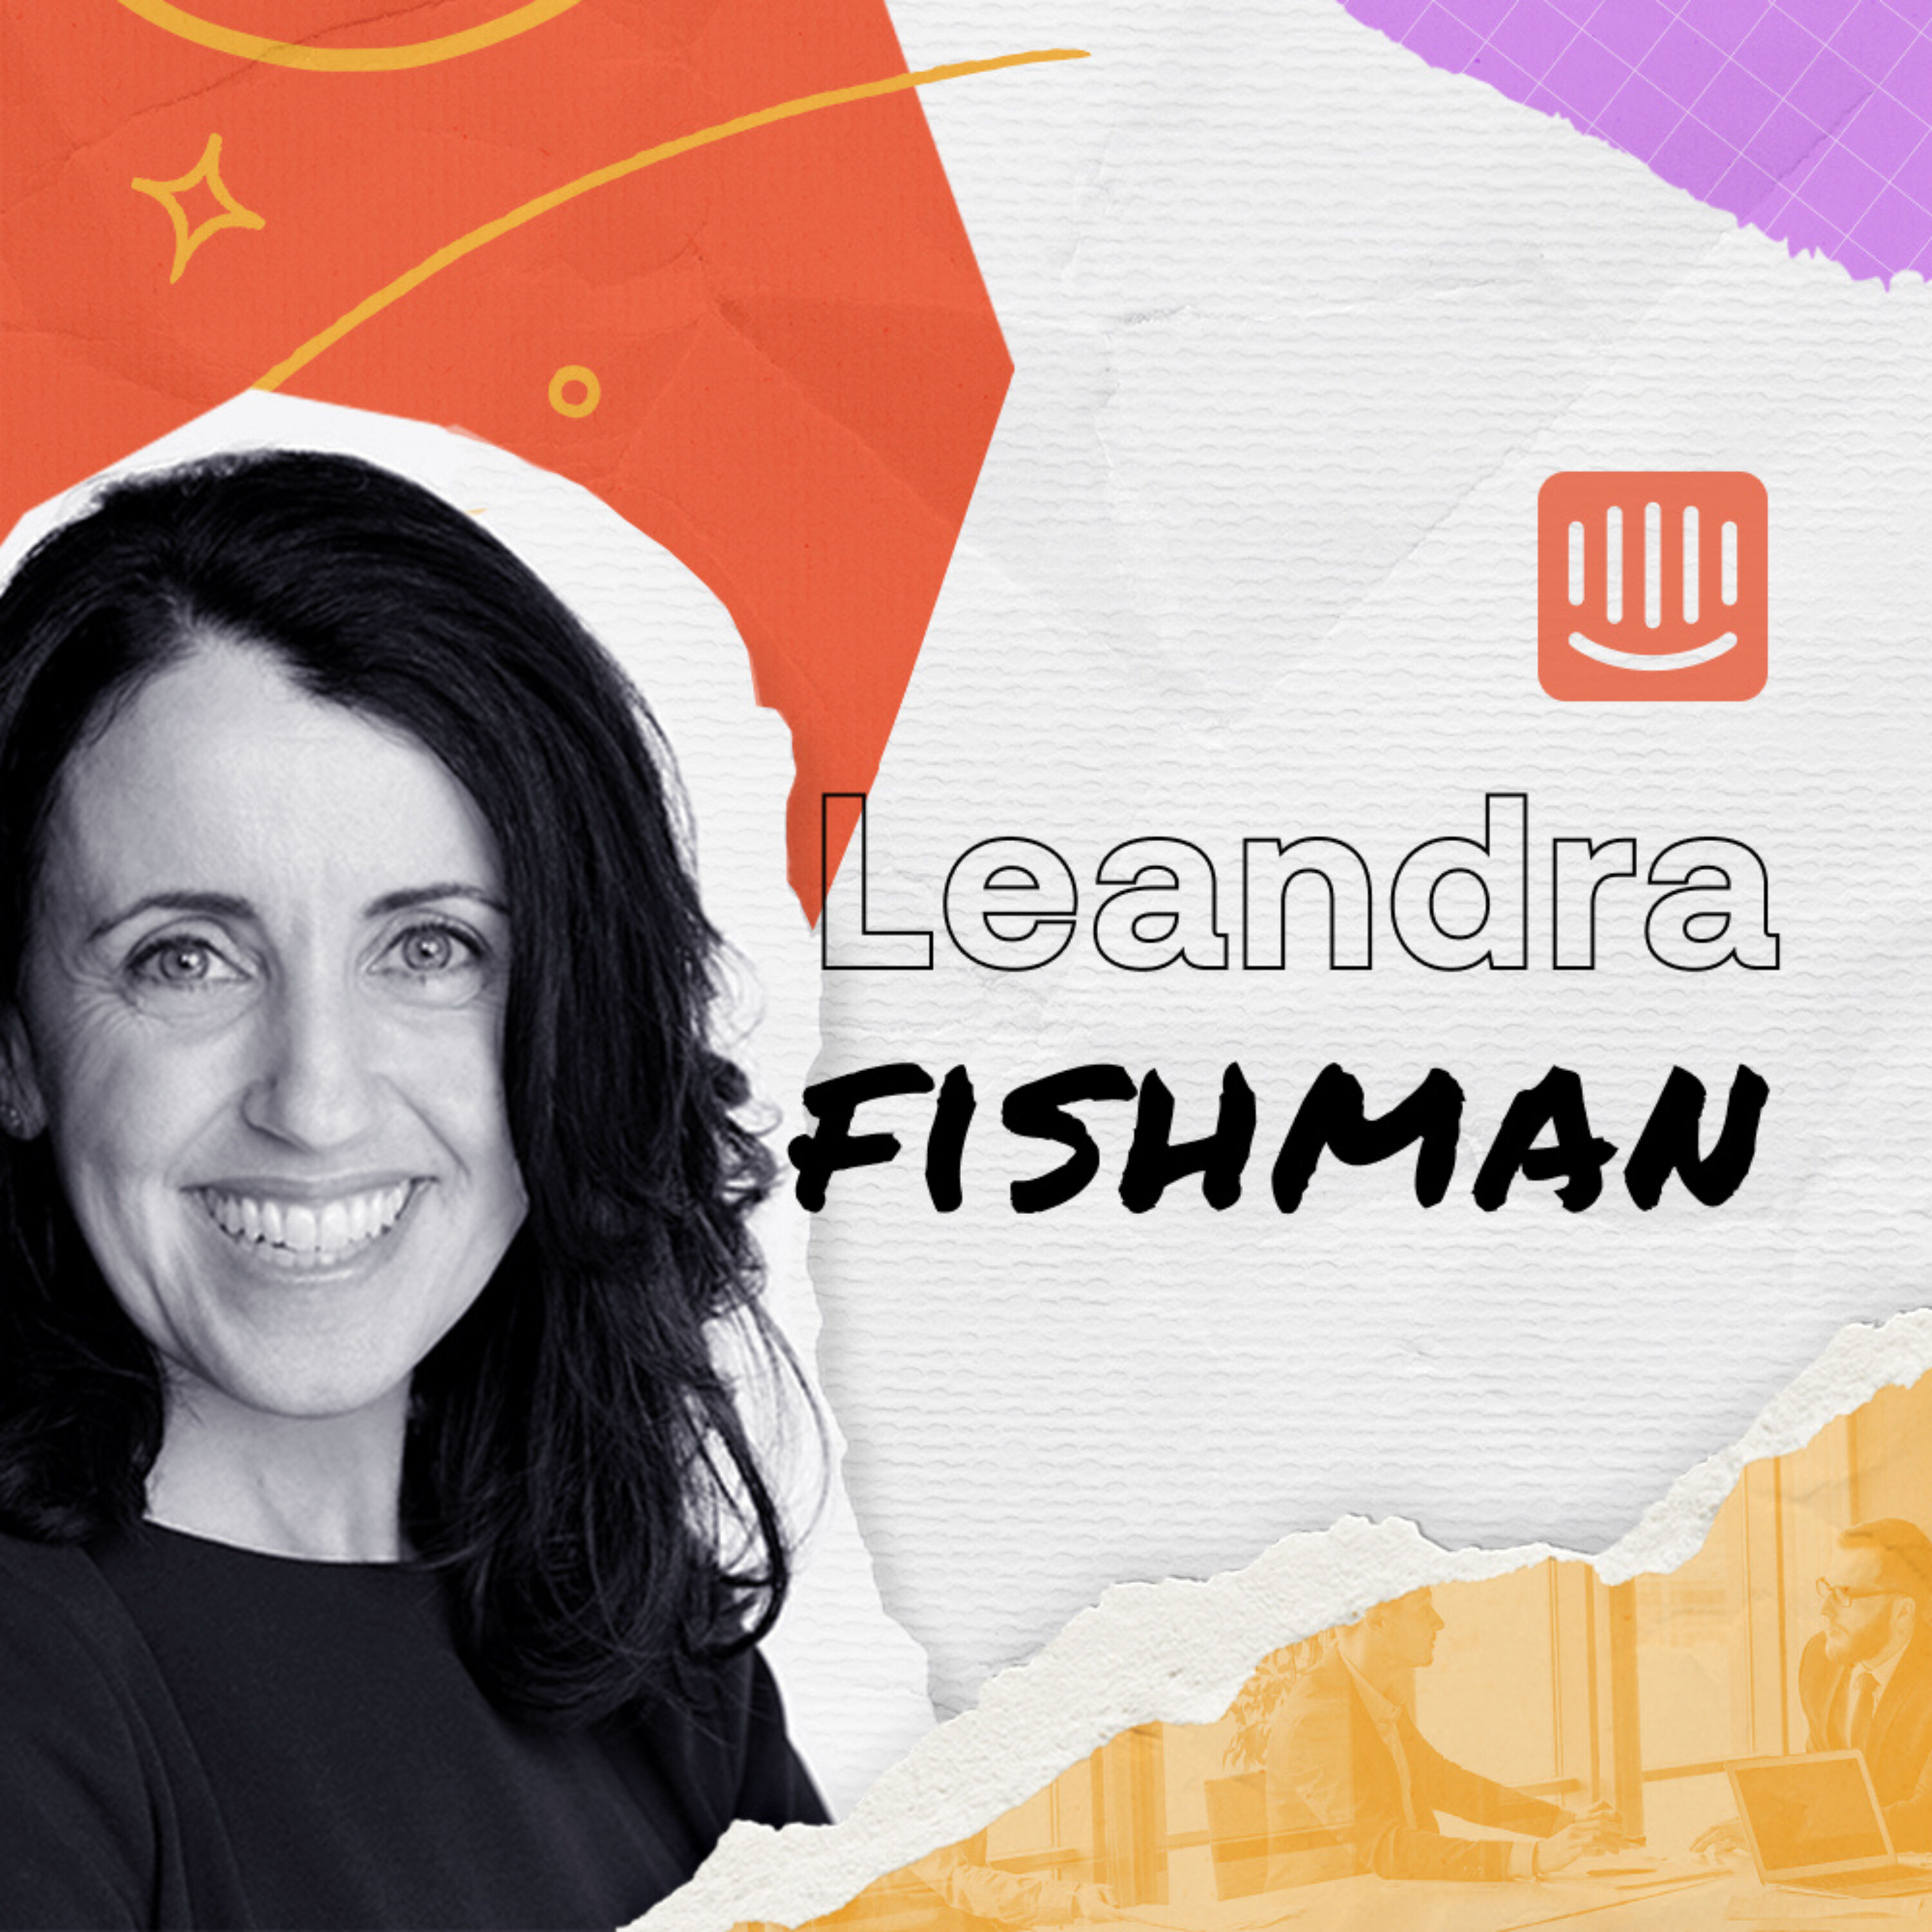 Leandra Fishman on driving revenue through stronger customer relationships